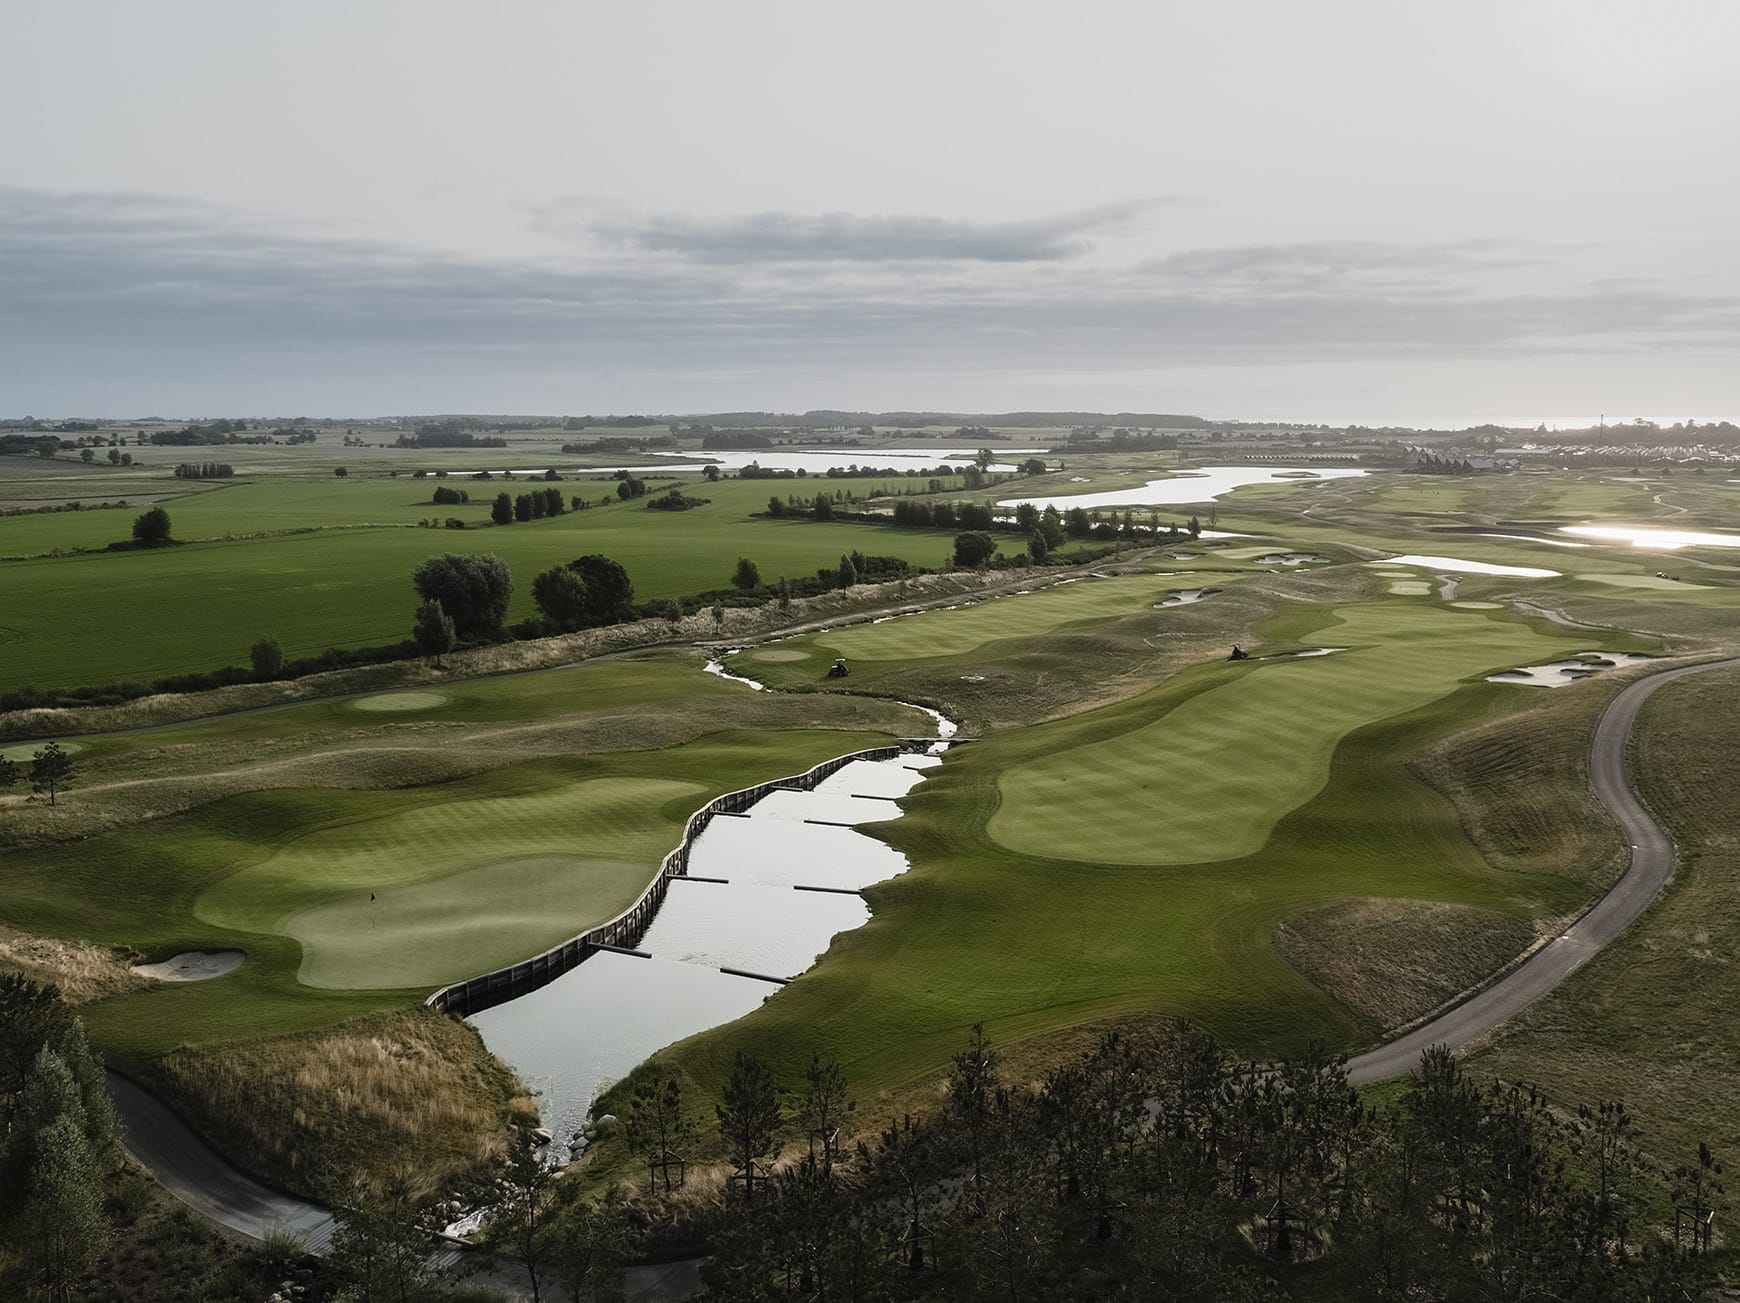 Recollection Ond Billy Great Northern golf Course - En unik 18-huls mesterskabsbane